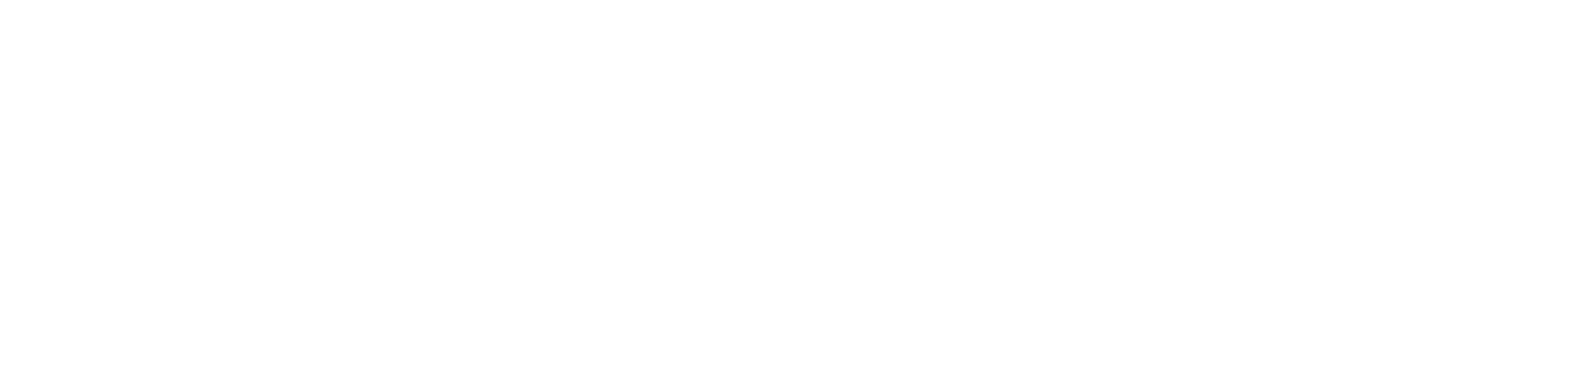 Nokia logo grand pour les fonds sombres (PNG transparent)